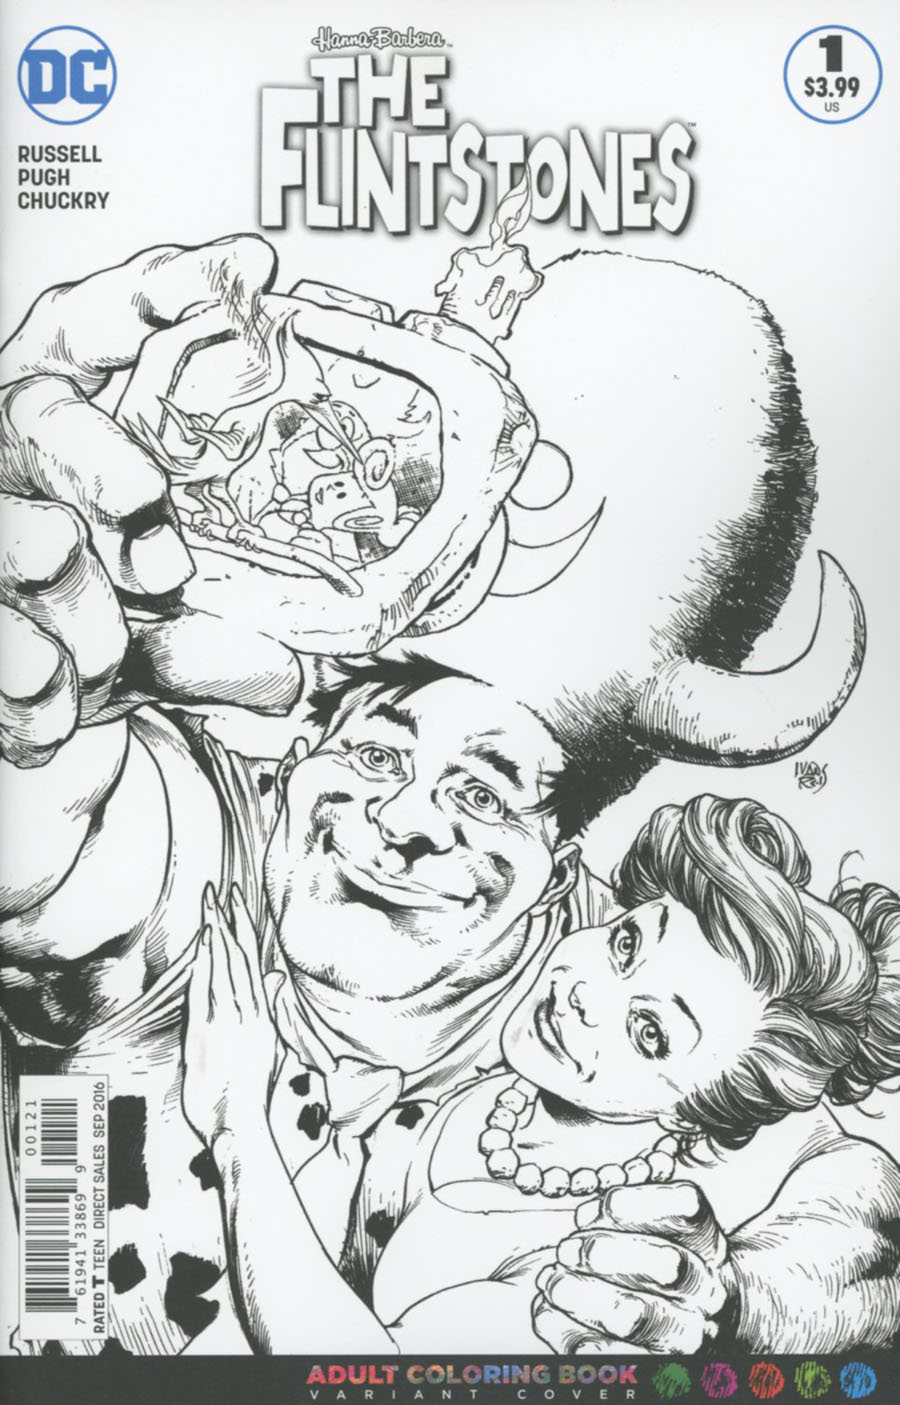 Flintstones (DC) #1 Cover F Variant Ivan Reis Adult Coloring Book Cover